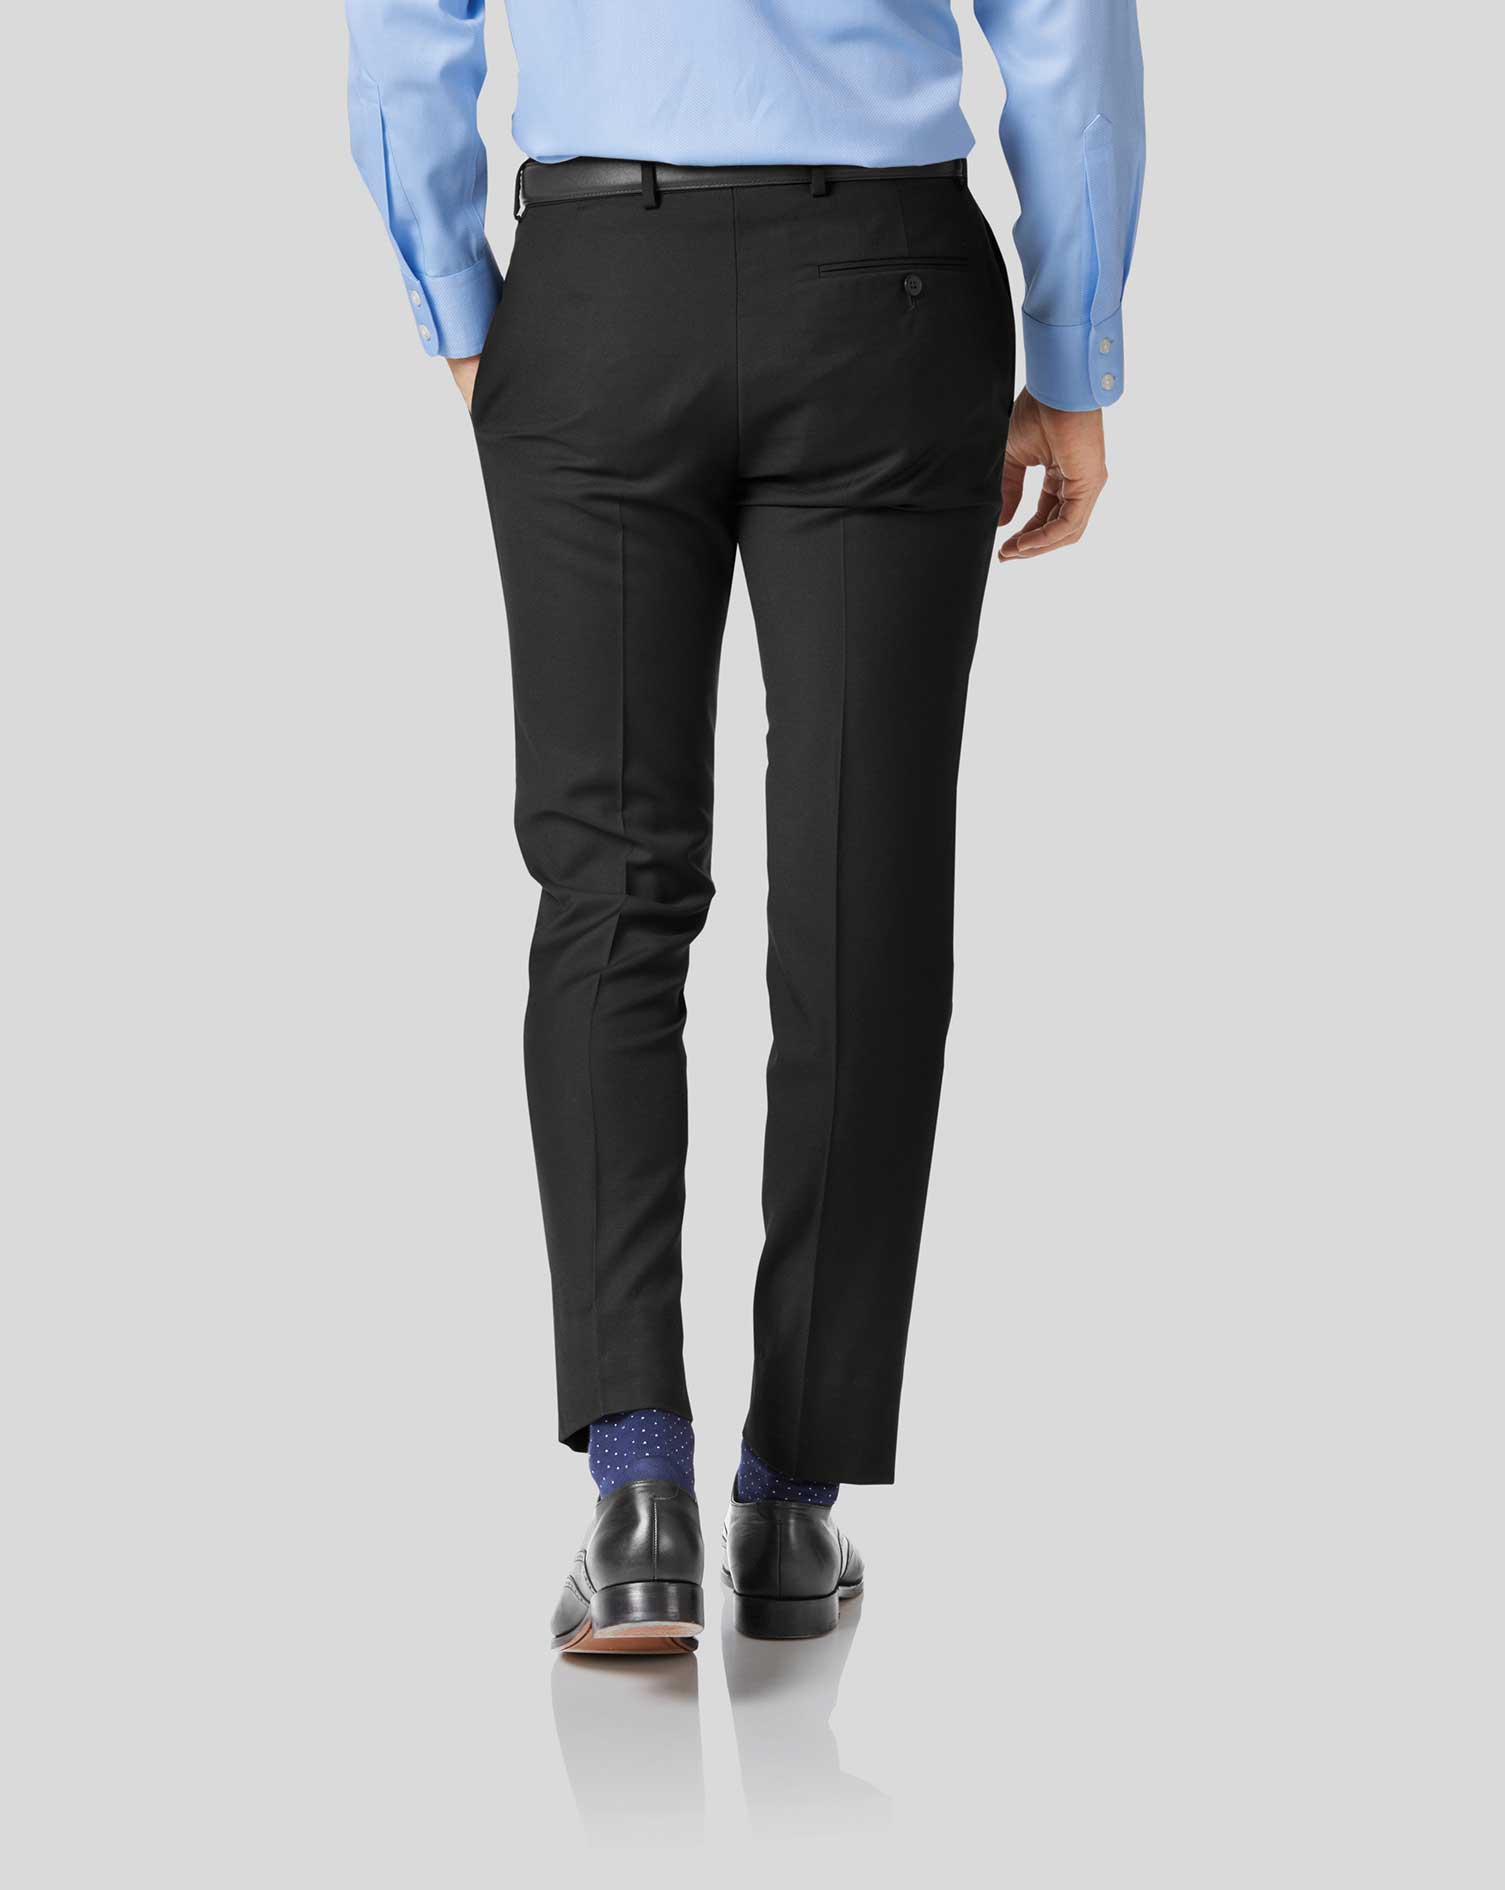 Black slim fit twill business suit | Charles Tyrwhitt